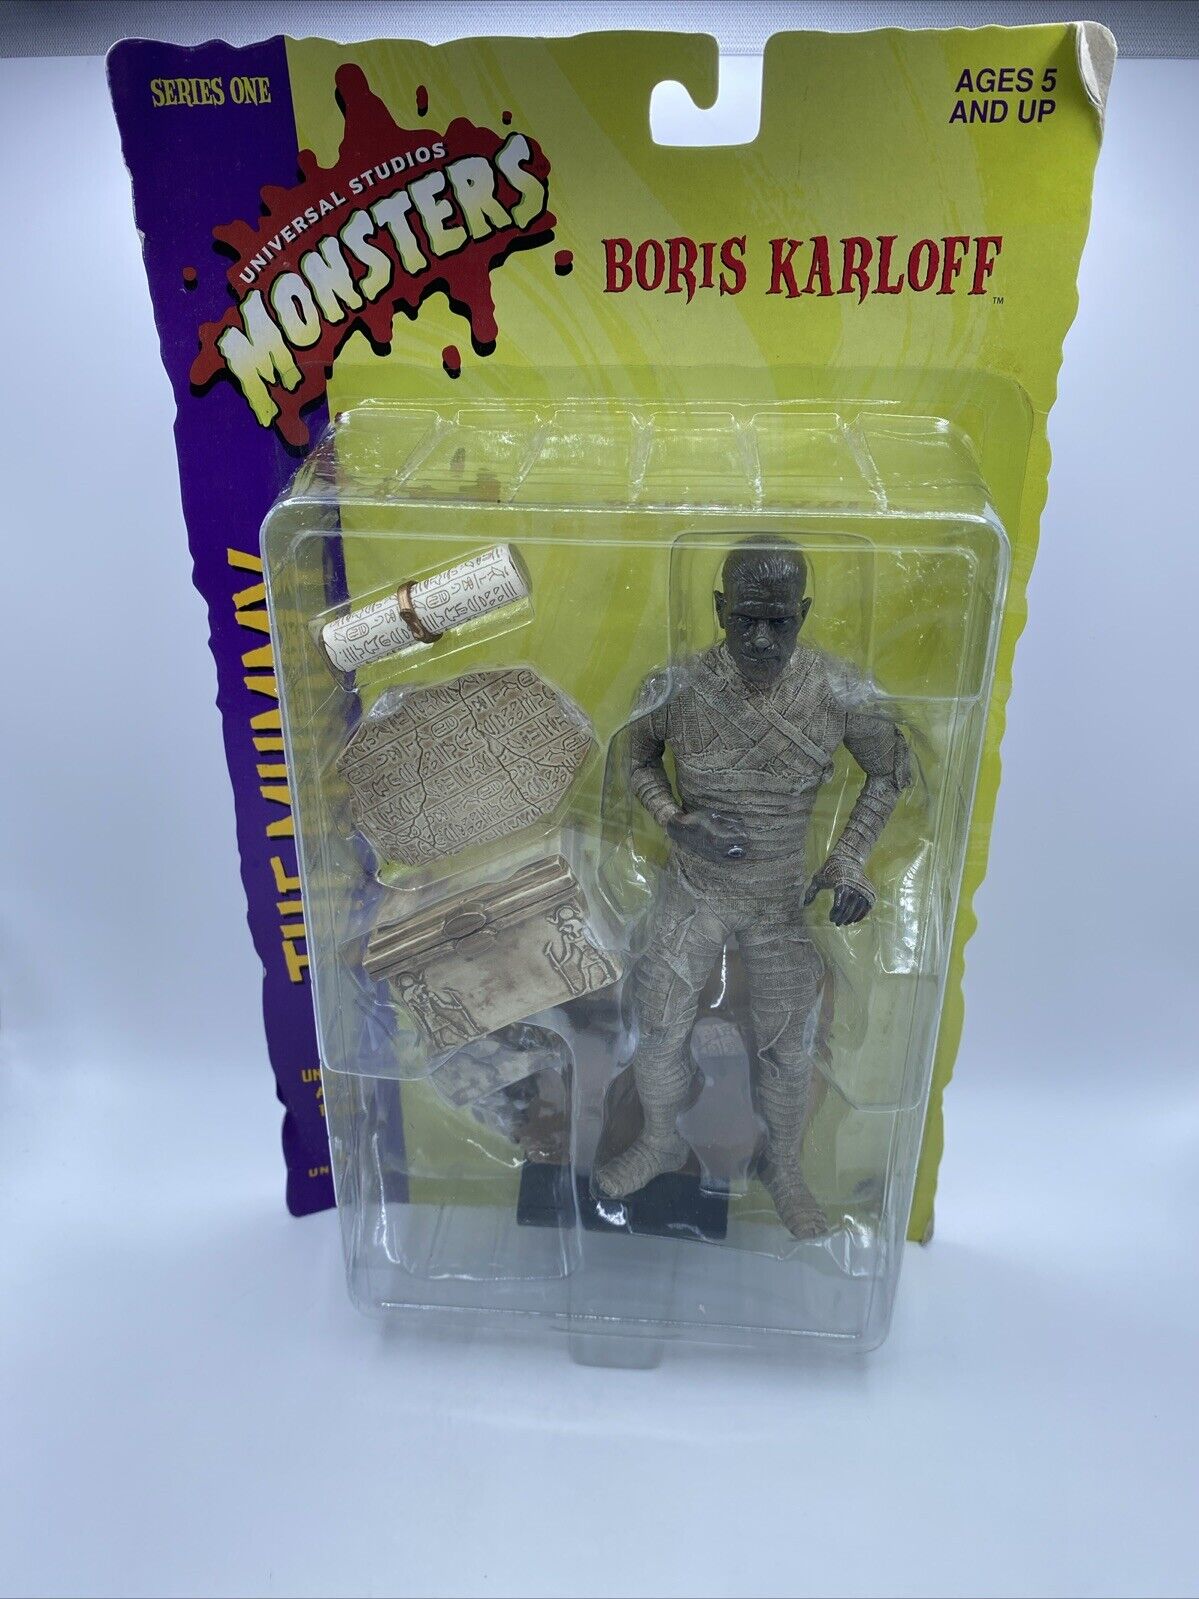 Awesome Sideshow Toys Universal Monsters The Mummy Boris Karloff Action Figure 1999 on eBay